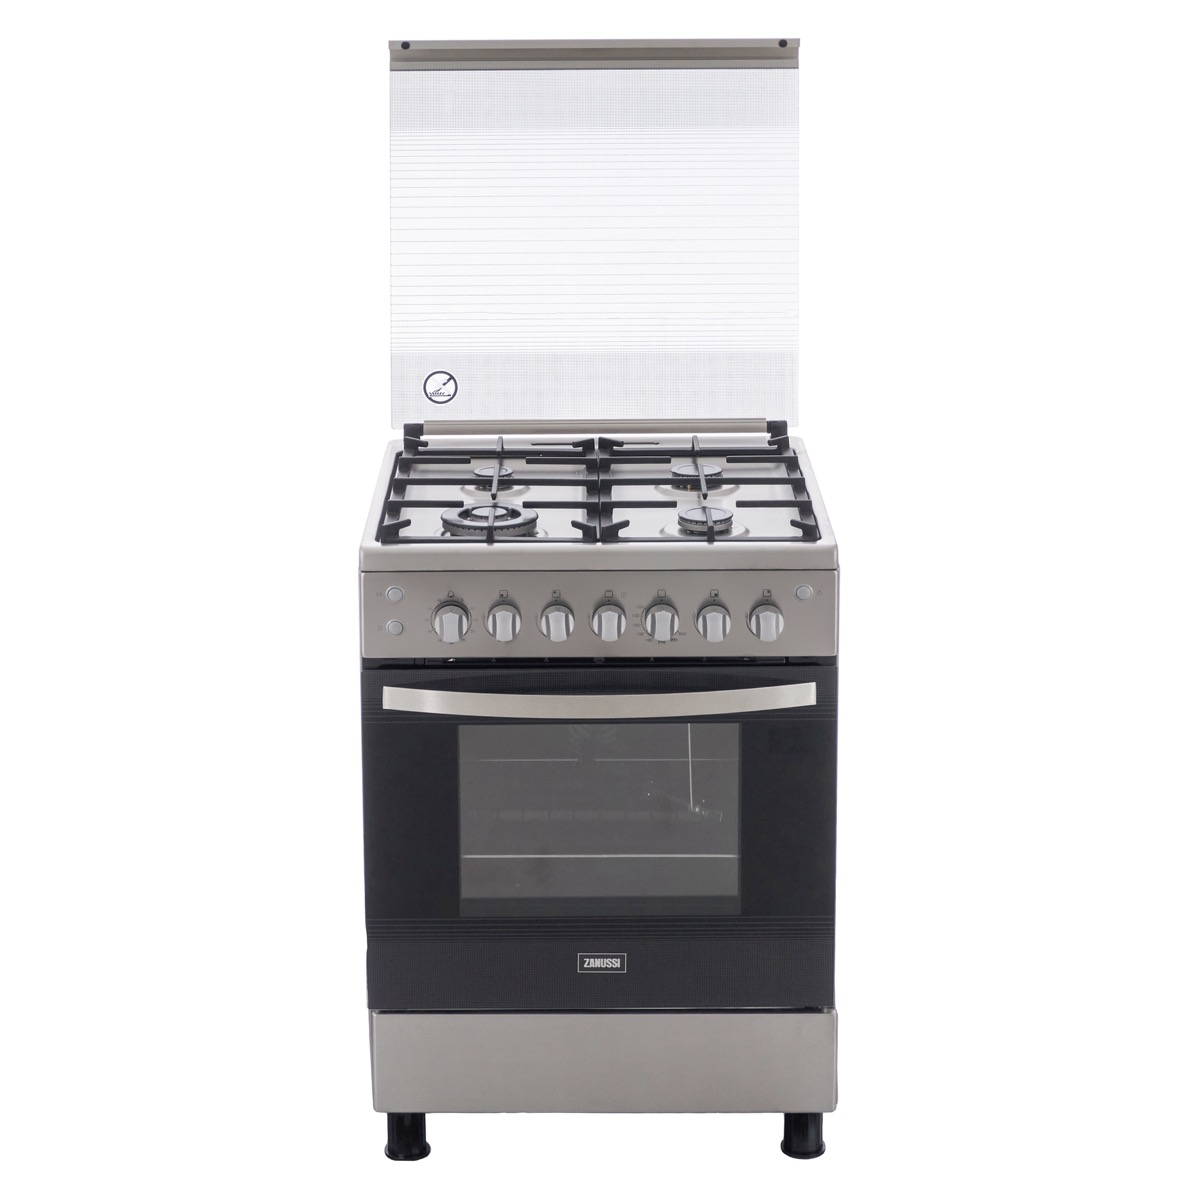 Zanussi Freestanding Gas Cooker, 4 Burners, Silver- ZCG61296XA